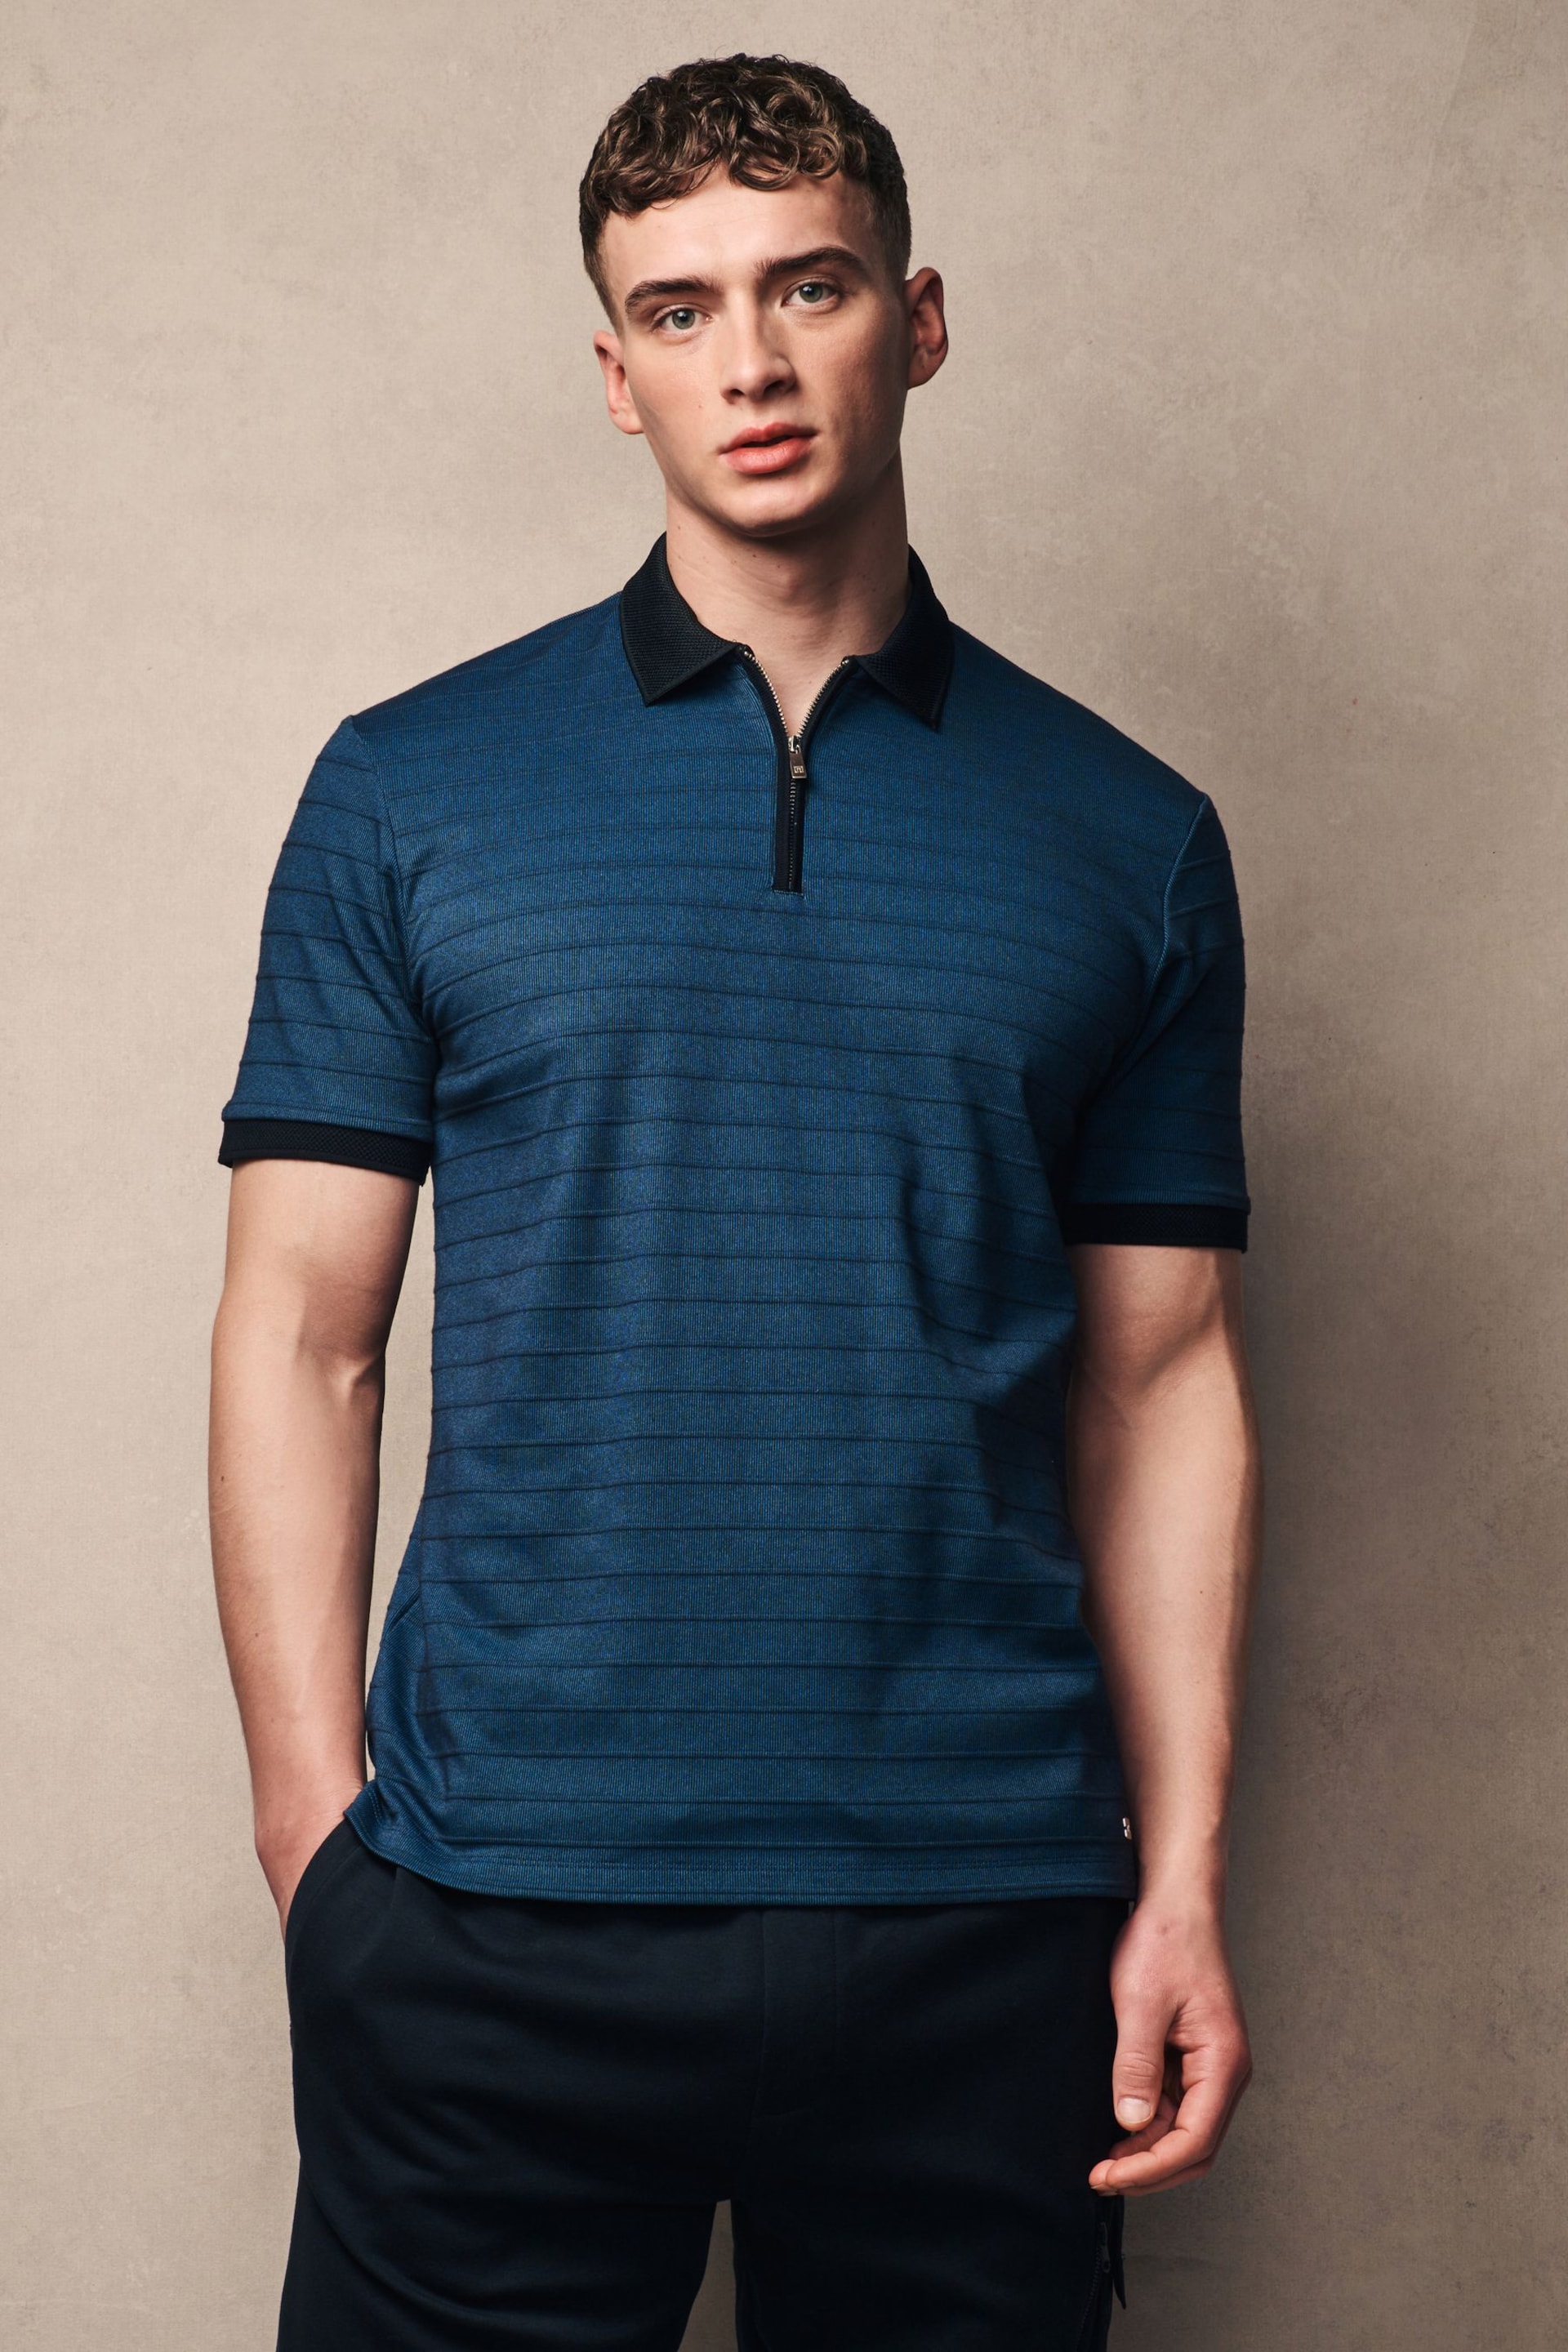 Black/Blue Zip Neck Smart Polo Shirt - Image 4 of 9